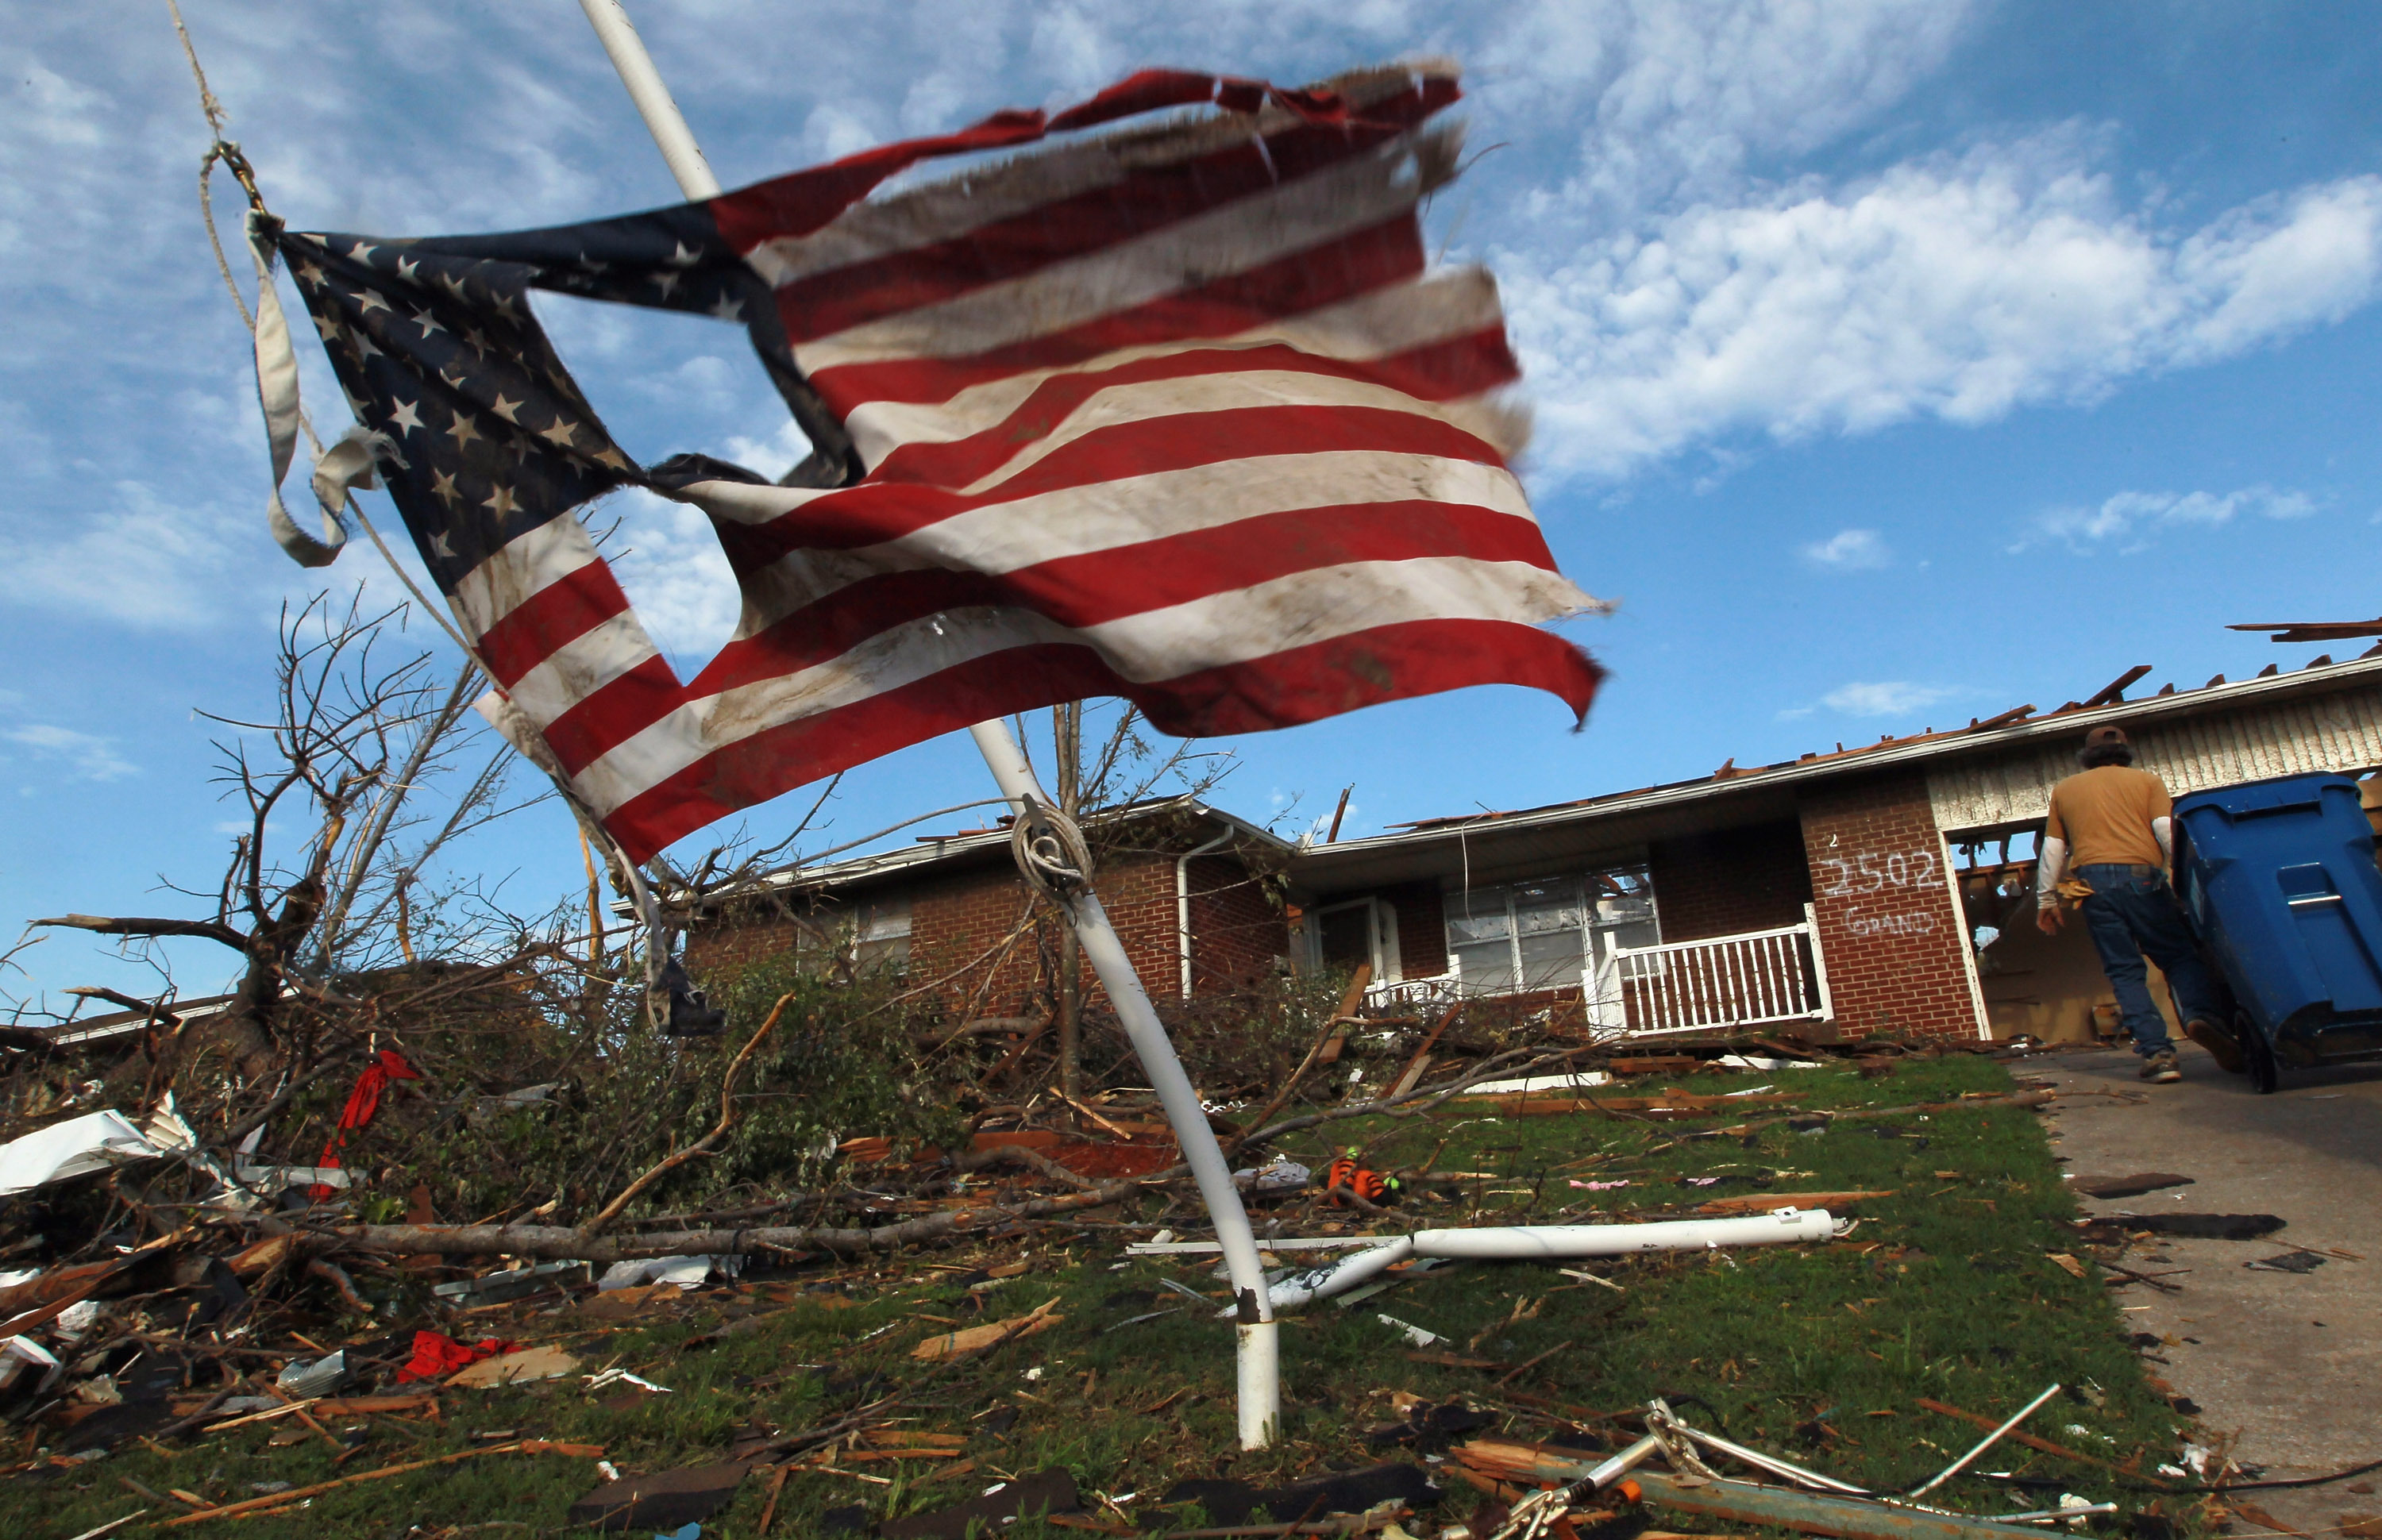 A tattered American flag flies outside a tornado-damaged home in Joplin, Missouri.